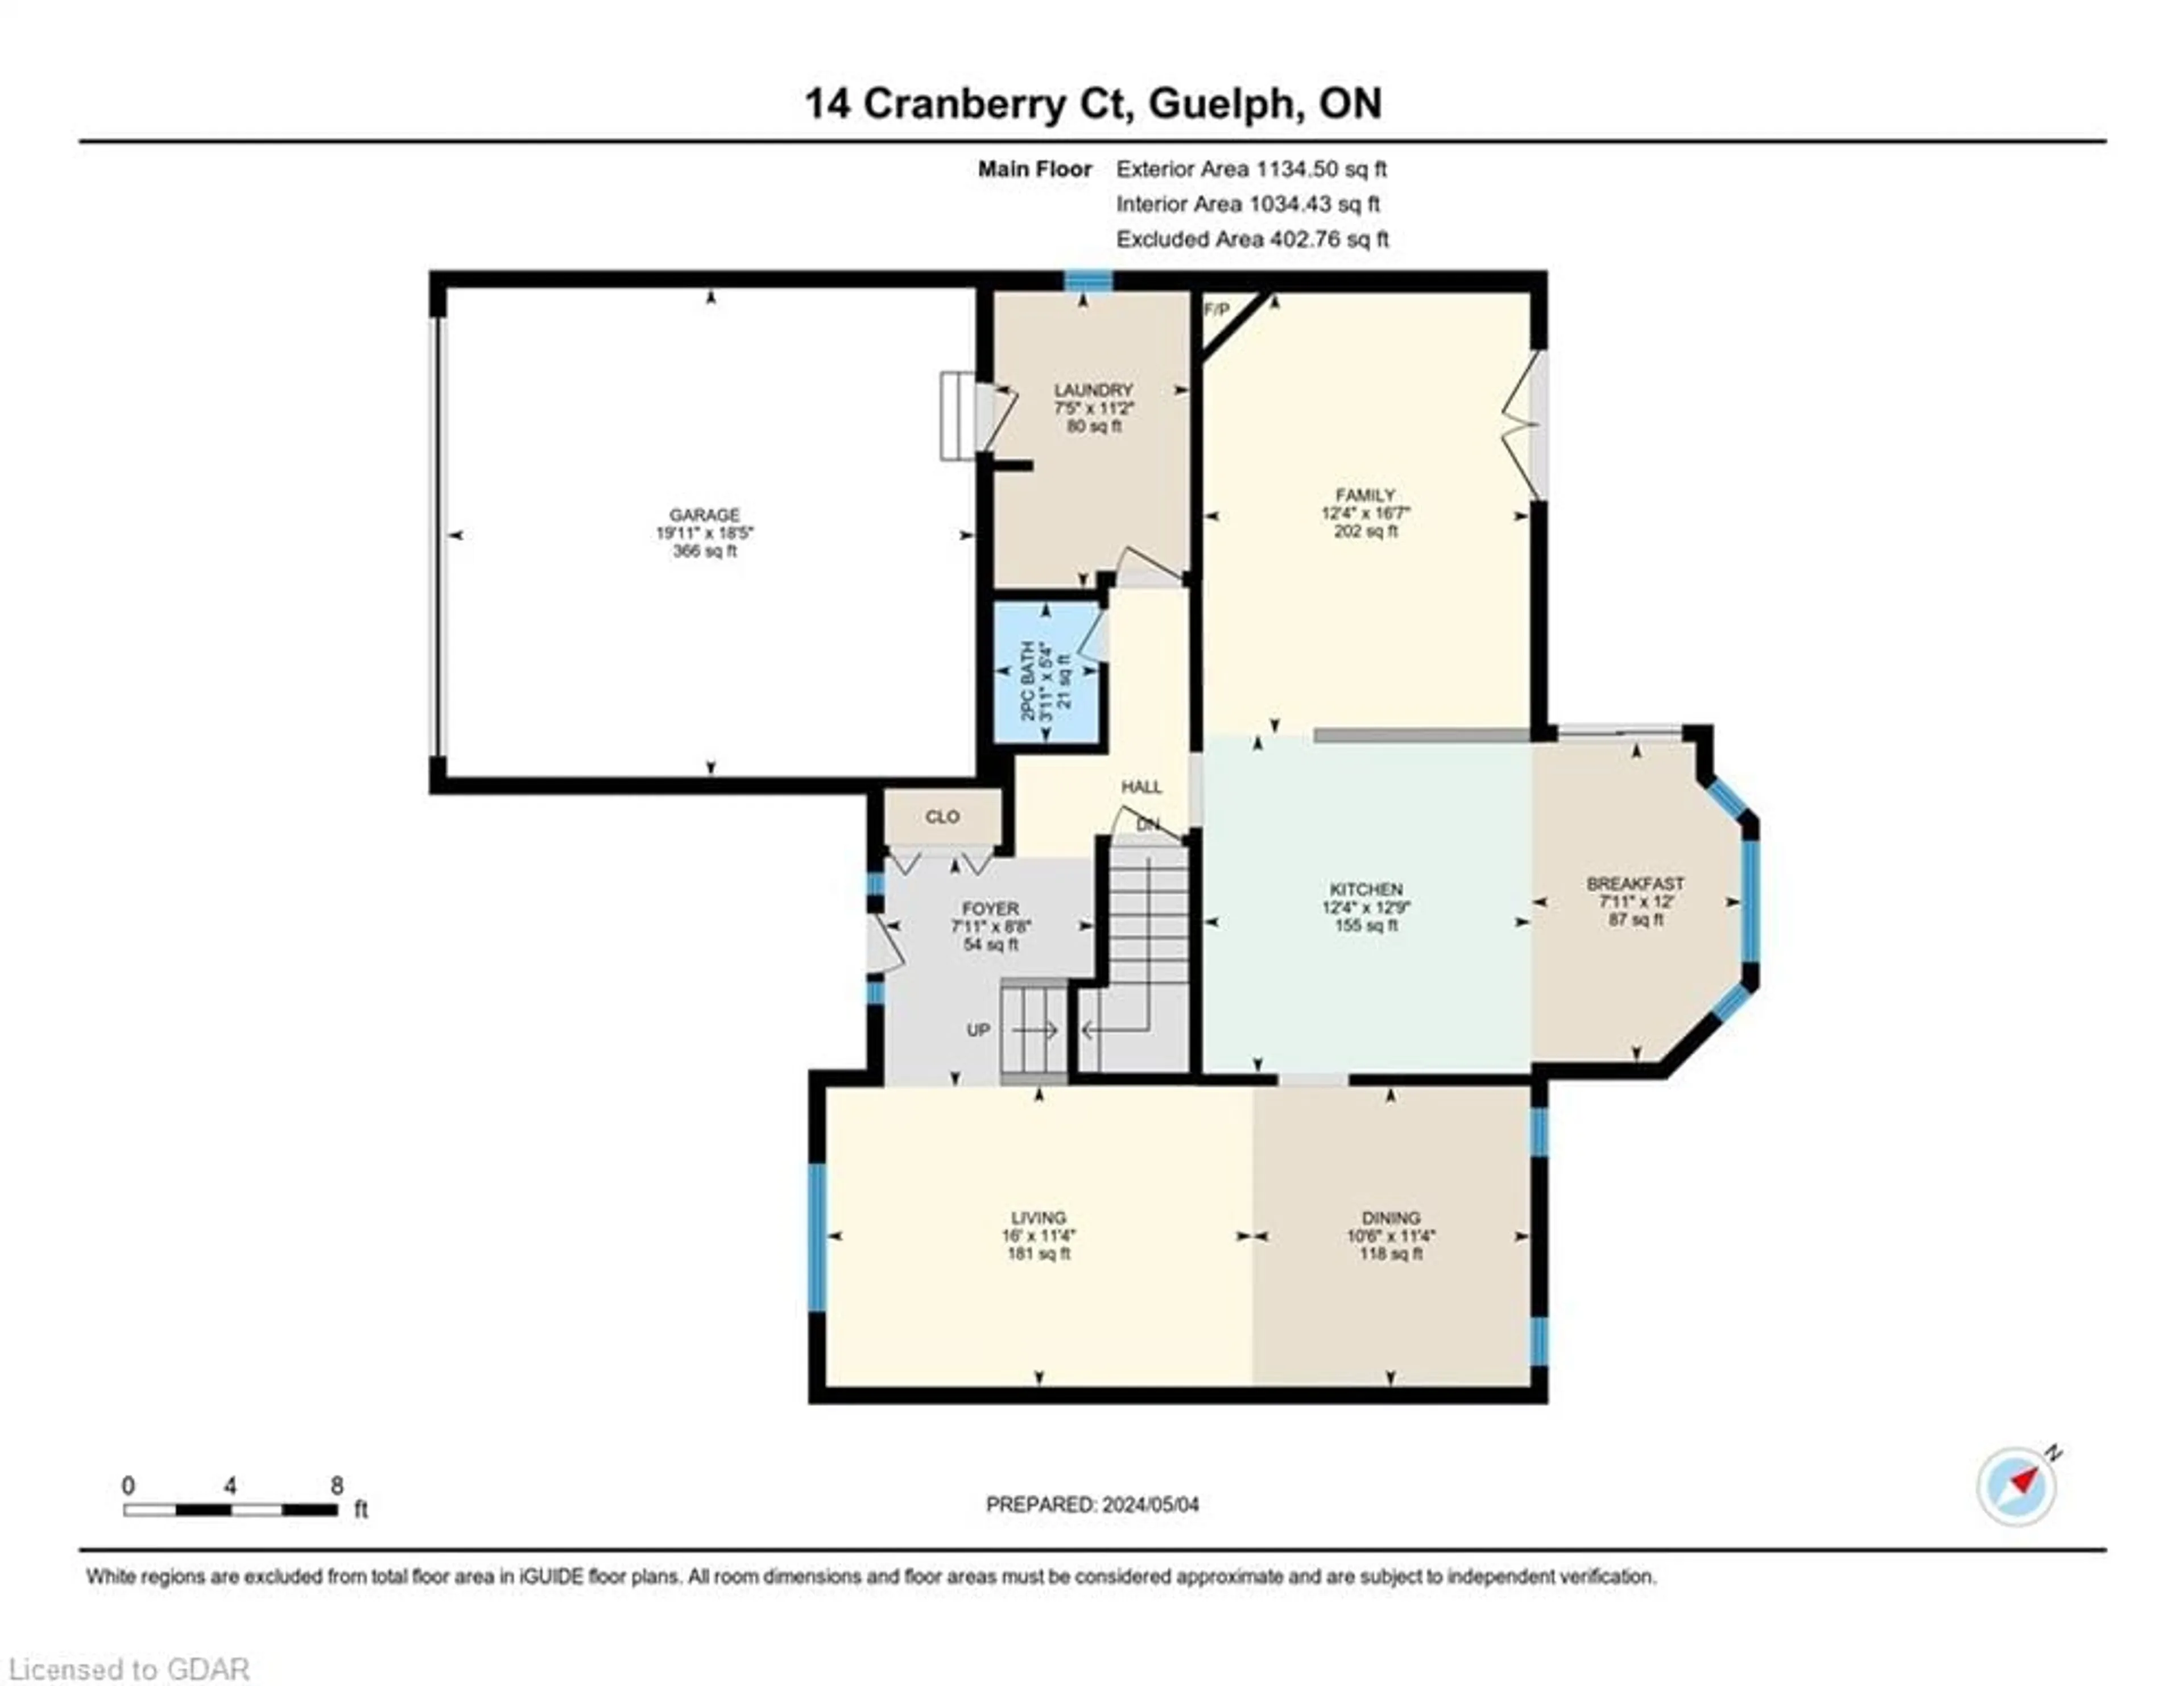 Floor plan for 14 Cranberry Crt, Guelph Ontario N1K 1R7